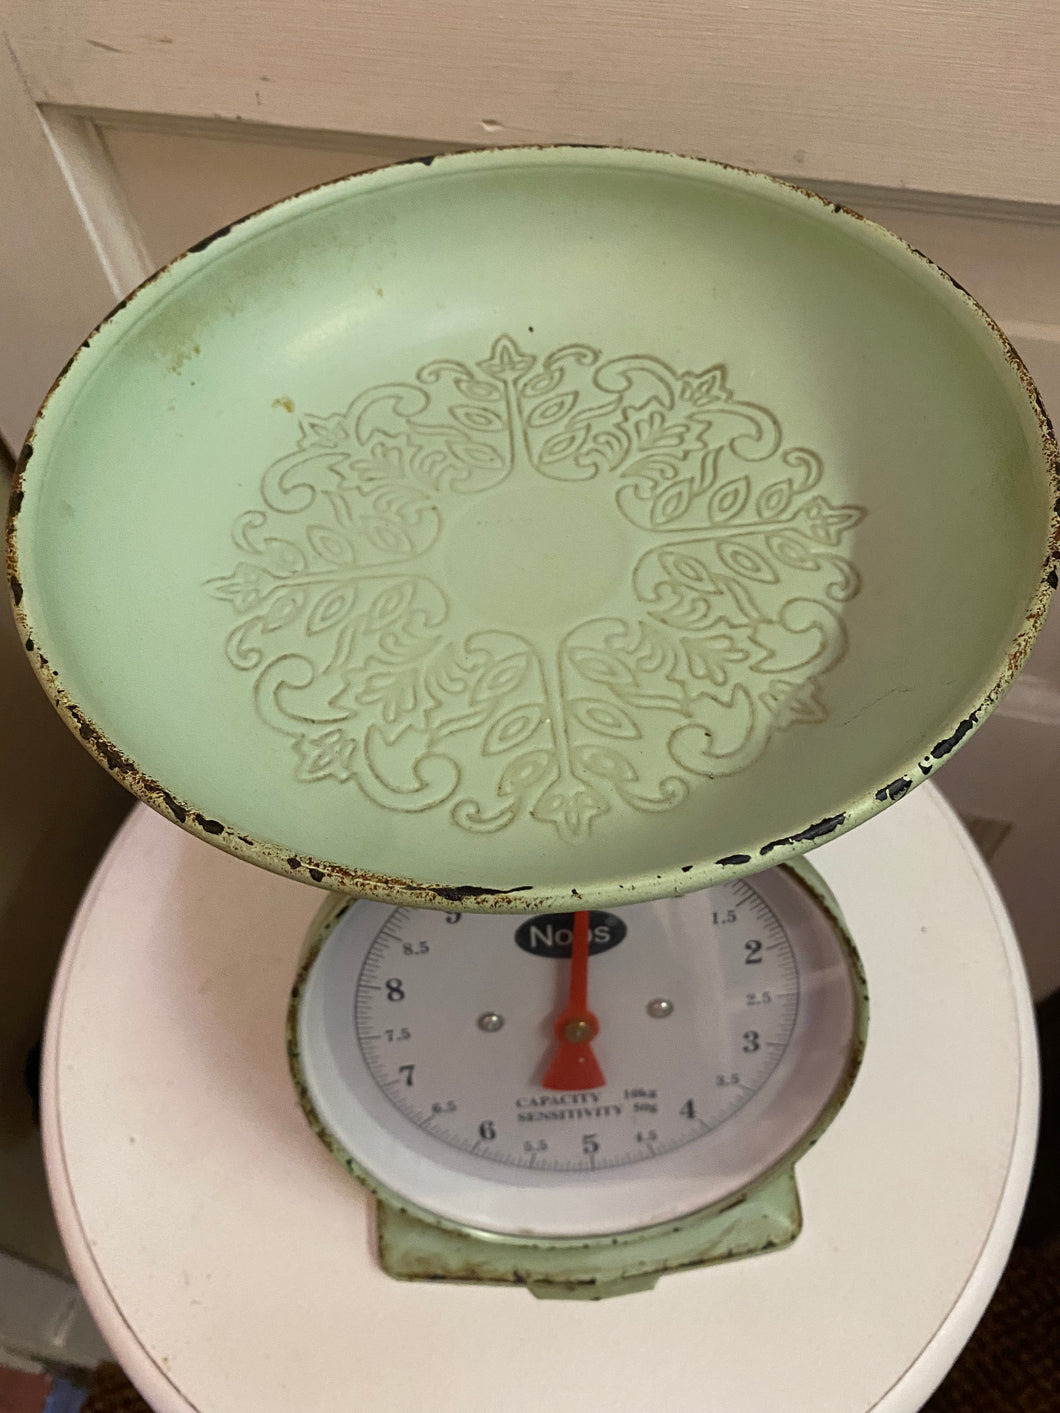 Antique French Kitchen Scale - Mint color